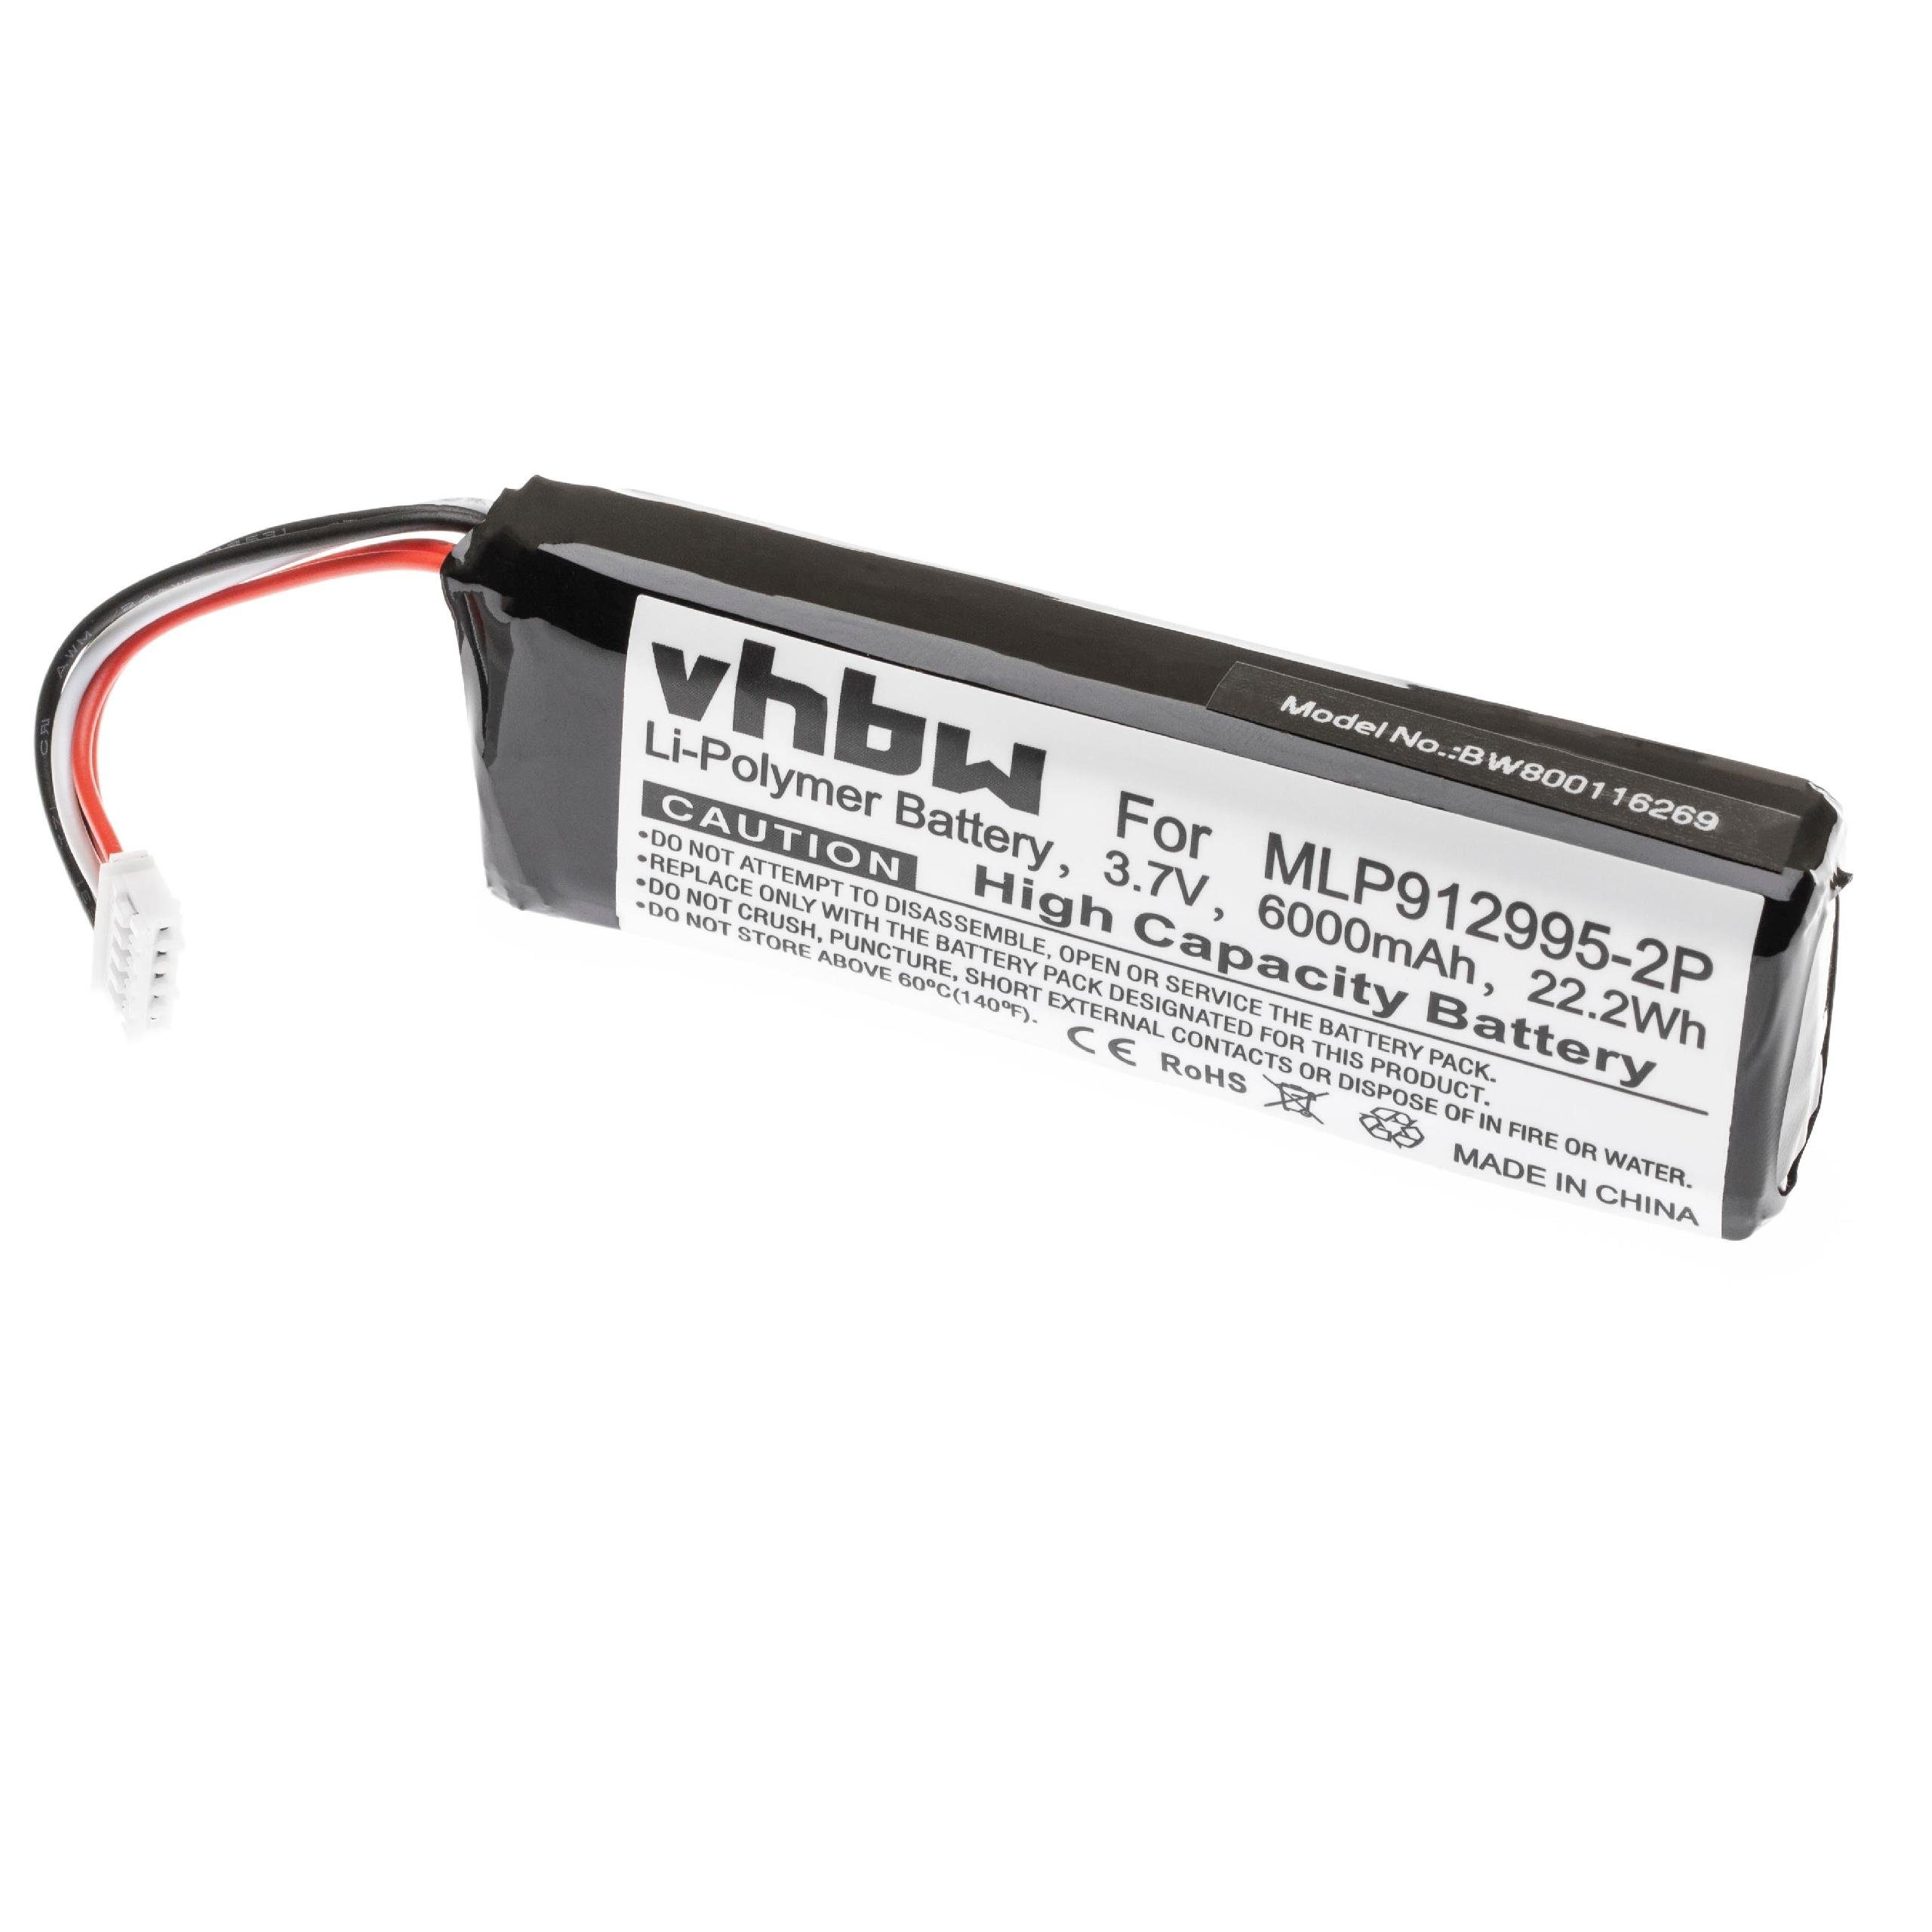 vhbw Ersatz für JBL MLP912995-2P für Akku Li-Polymer 6000 mAh (3,7 V)